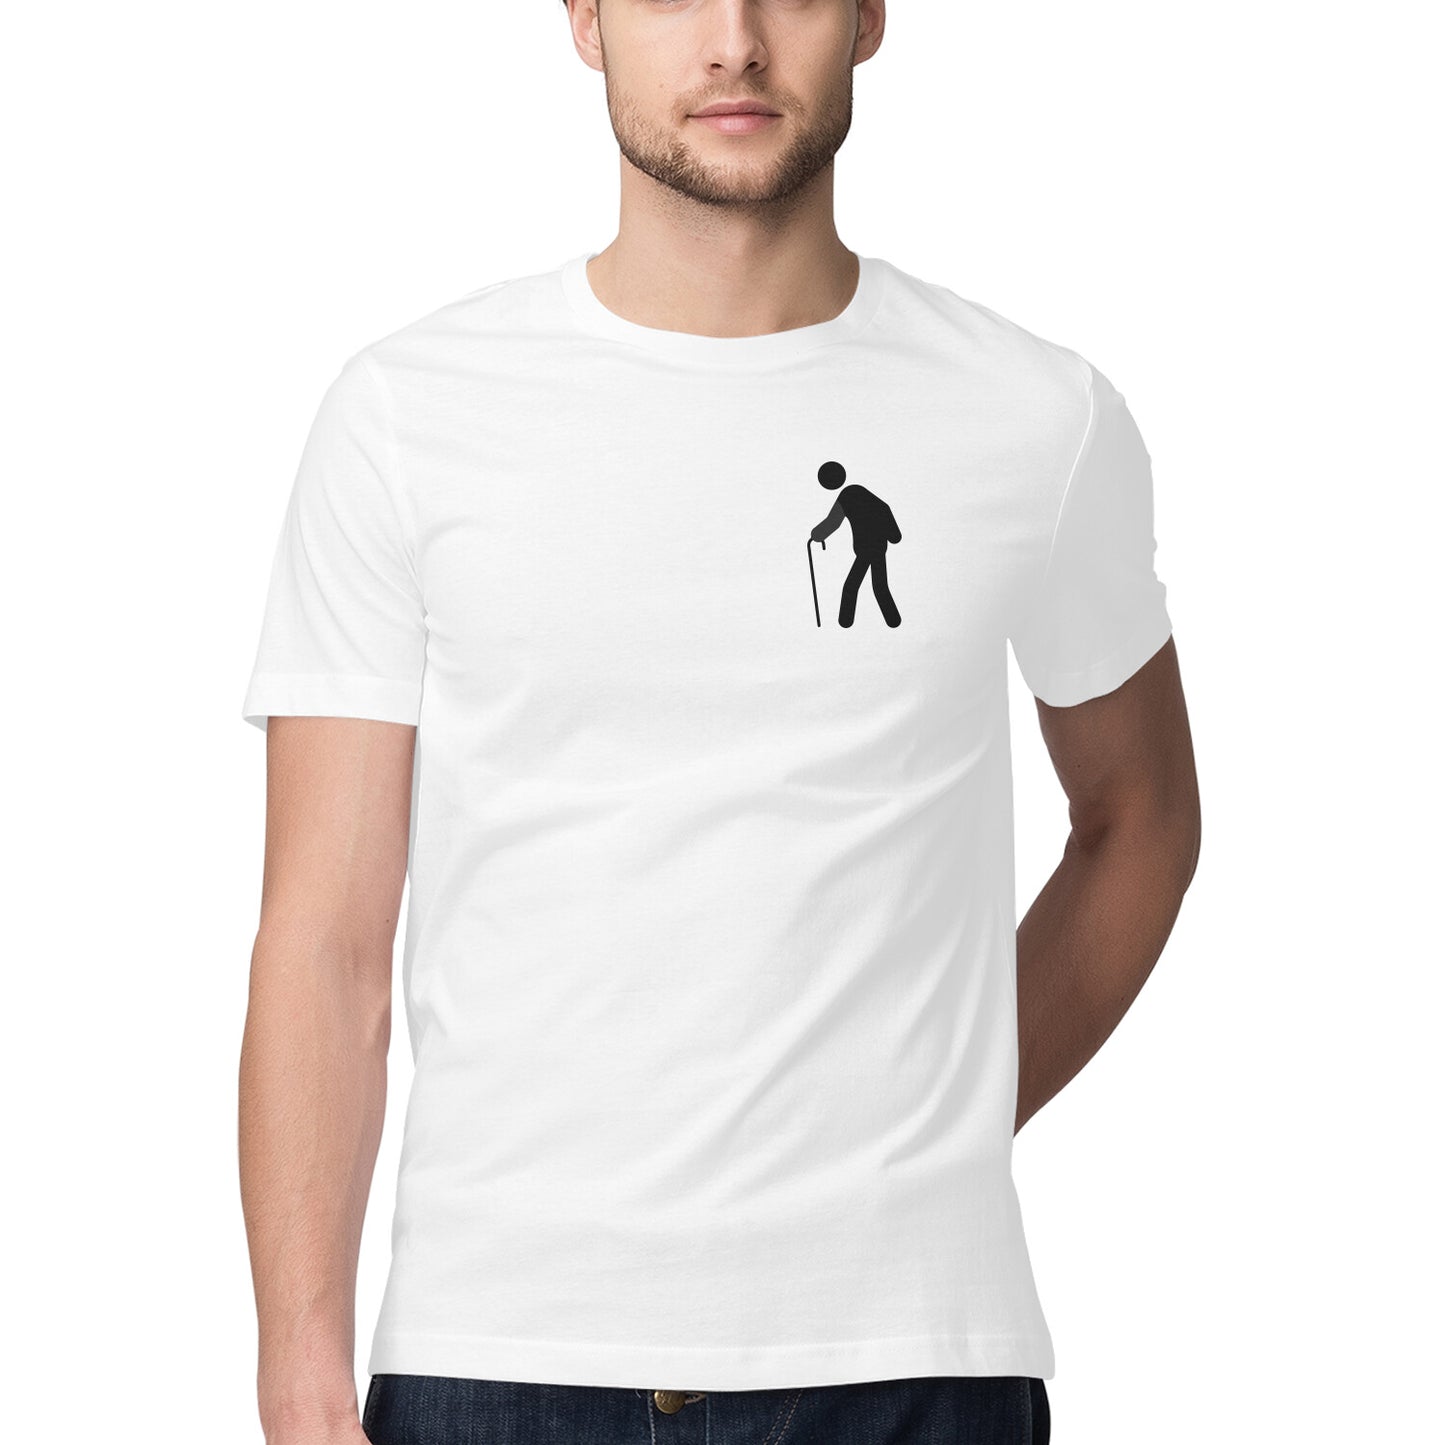 Walking Stick Man - Unisex Tshirt